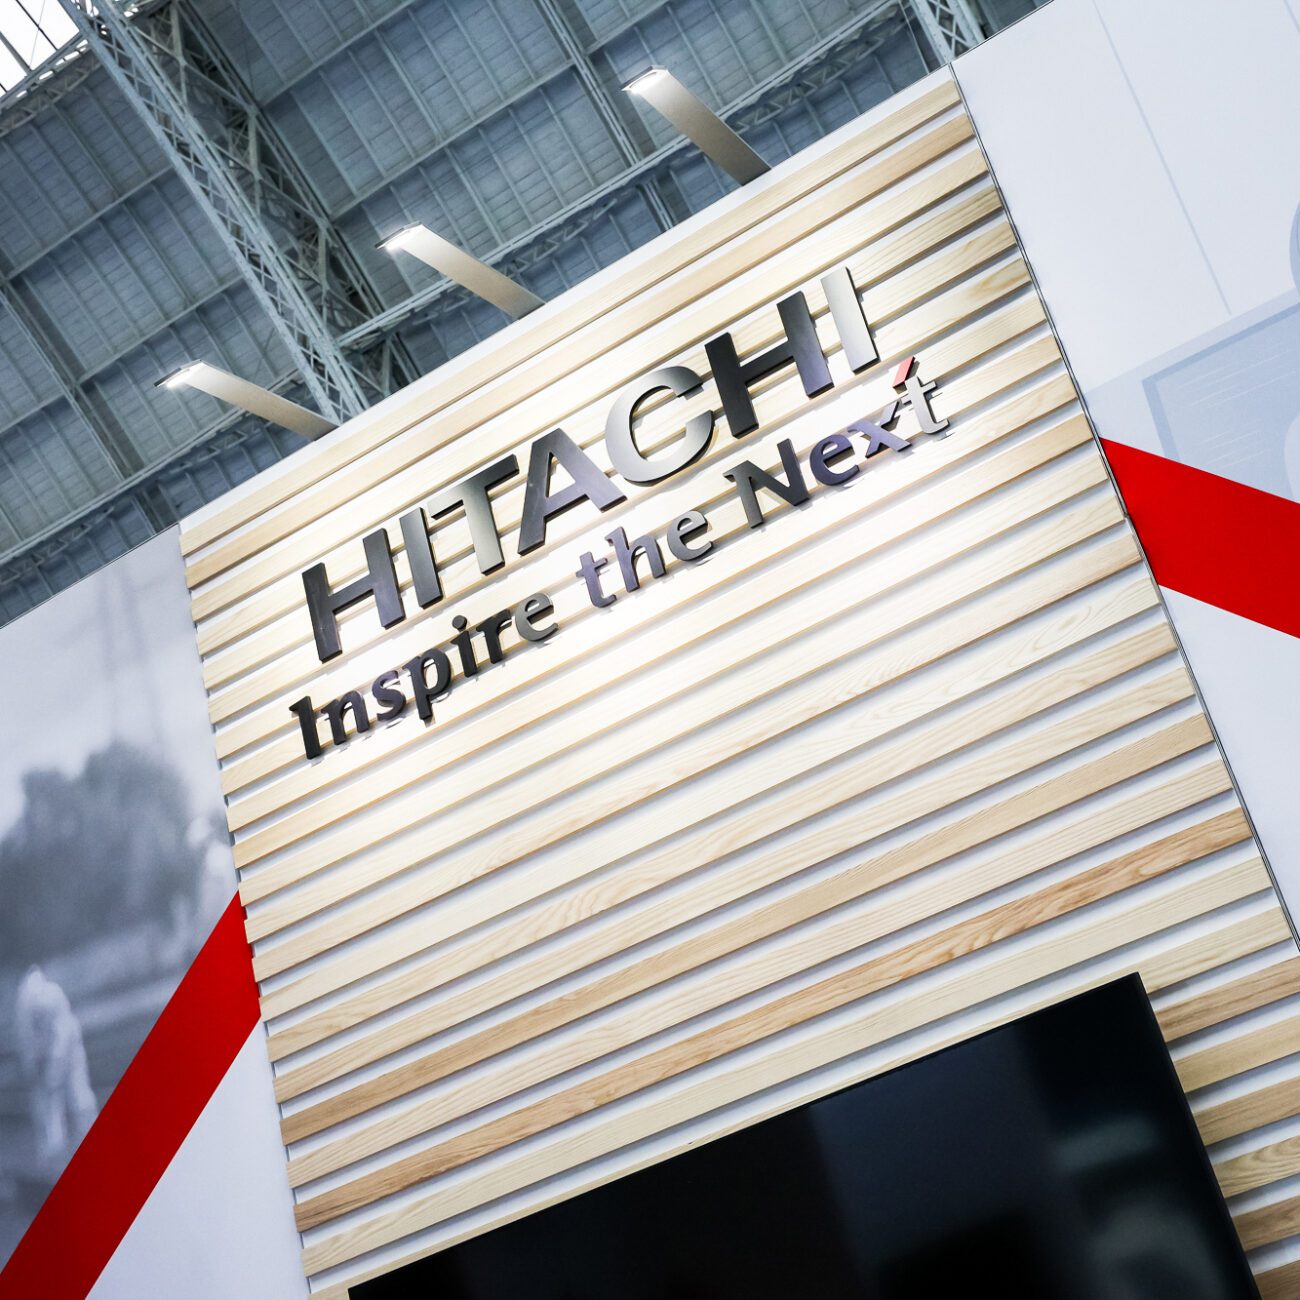 Hitachi exhibition stand at Railex. Detail shot of wall logo